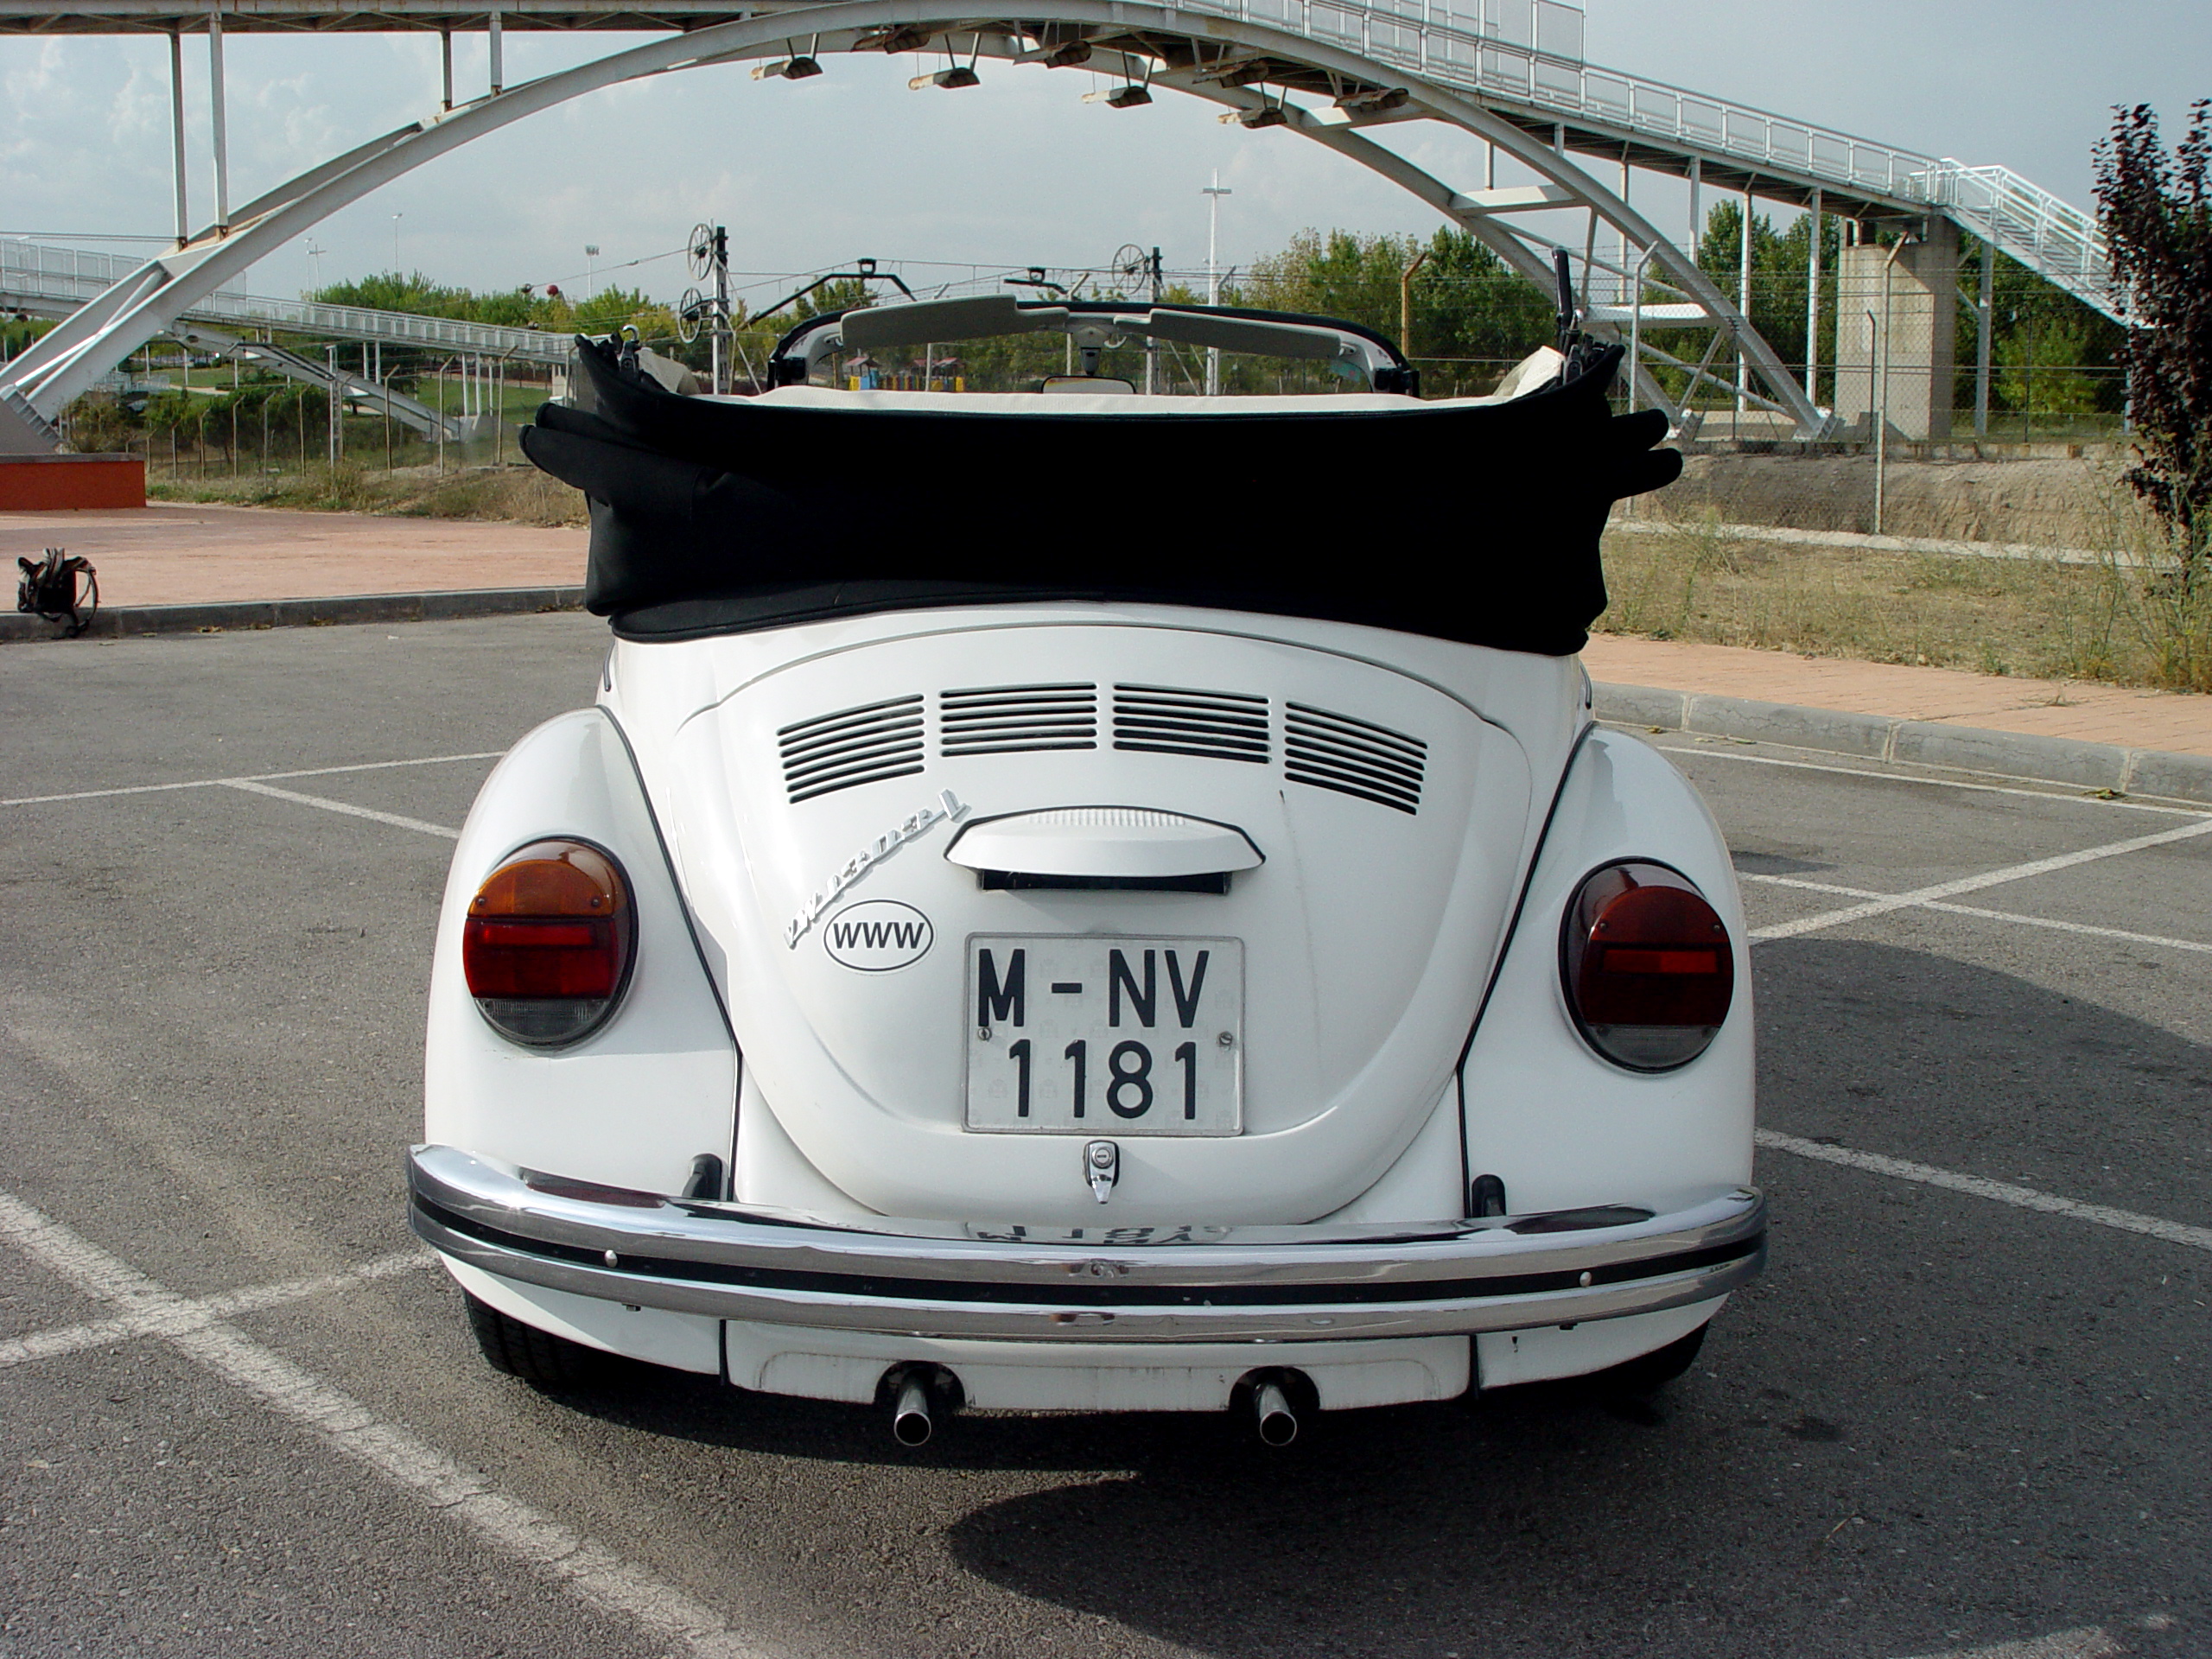 Volkswagen Beetle 1303 Cabrio | Flickr - Photo Sharing!